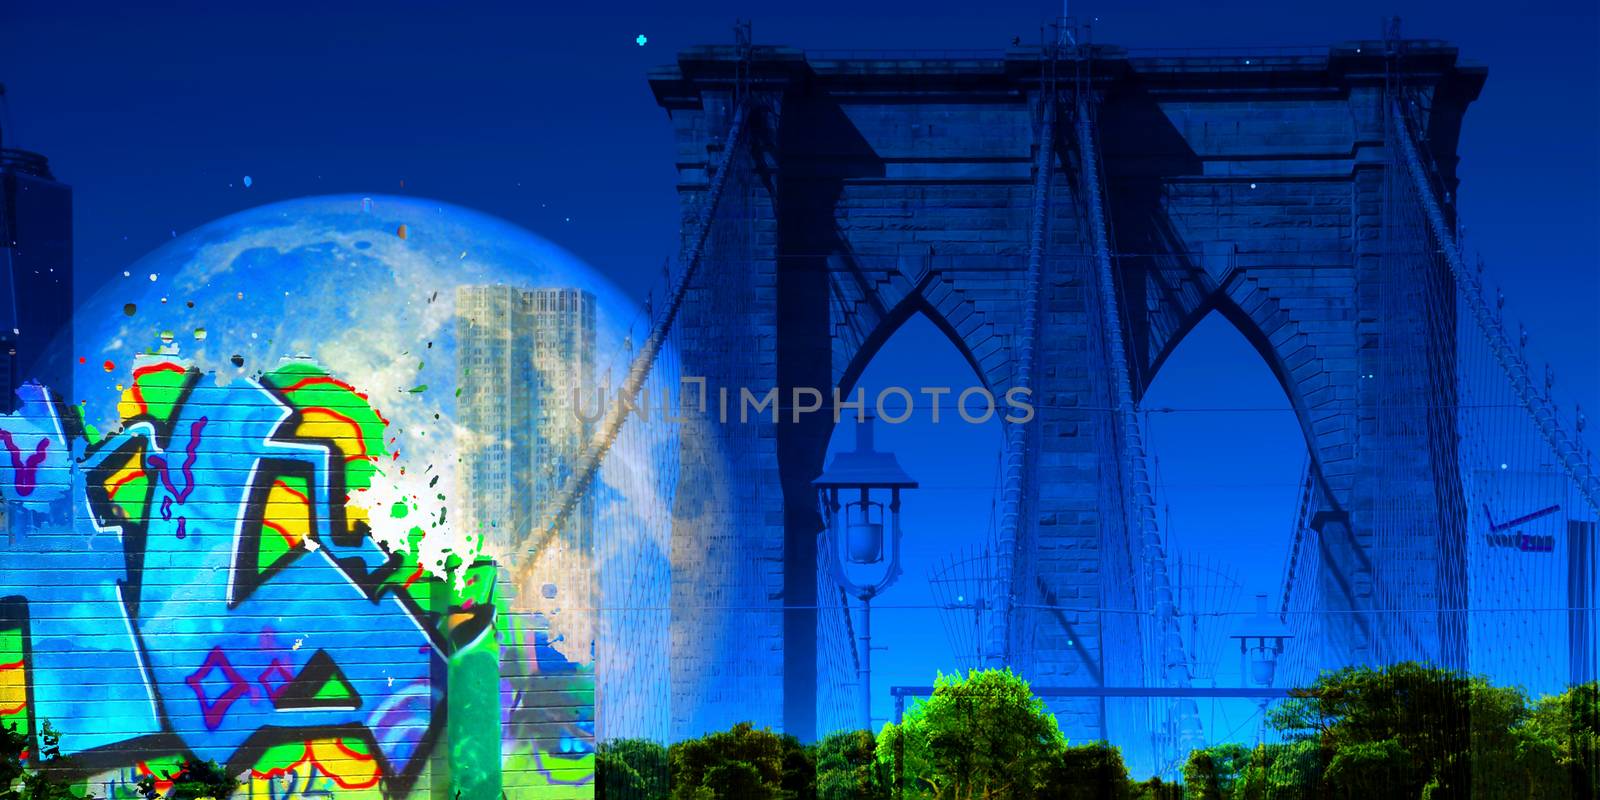 Surreal digital art. Brooklyn bridge. Giant moon in the sky